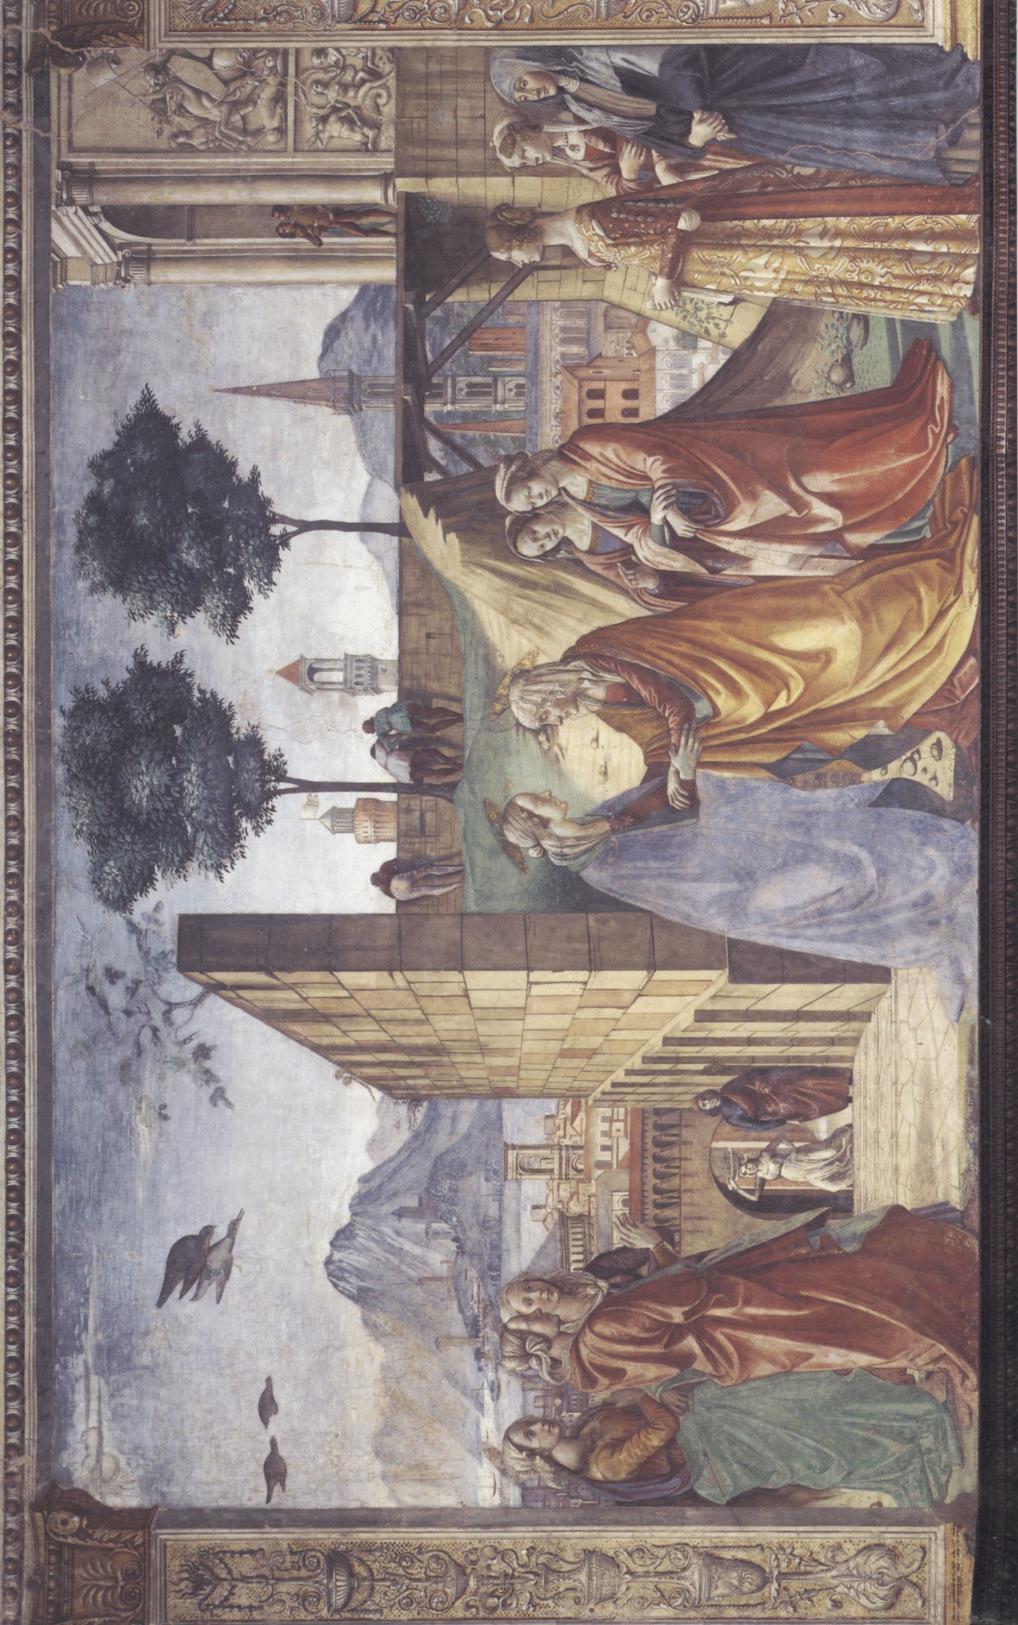 Plate 18: Domenico Bigordi called Ghirlandaio, and workshop, Visitation, lower